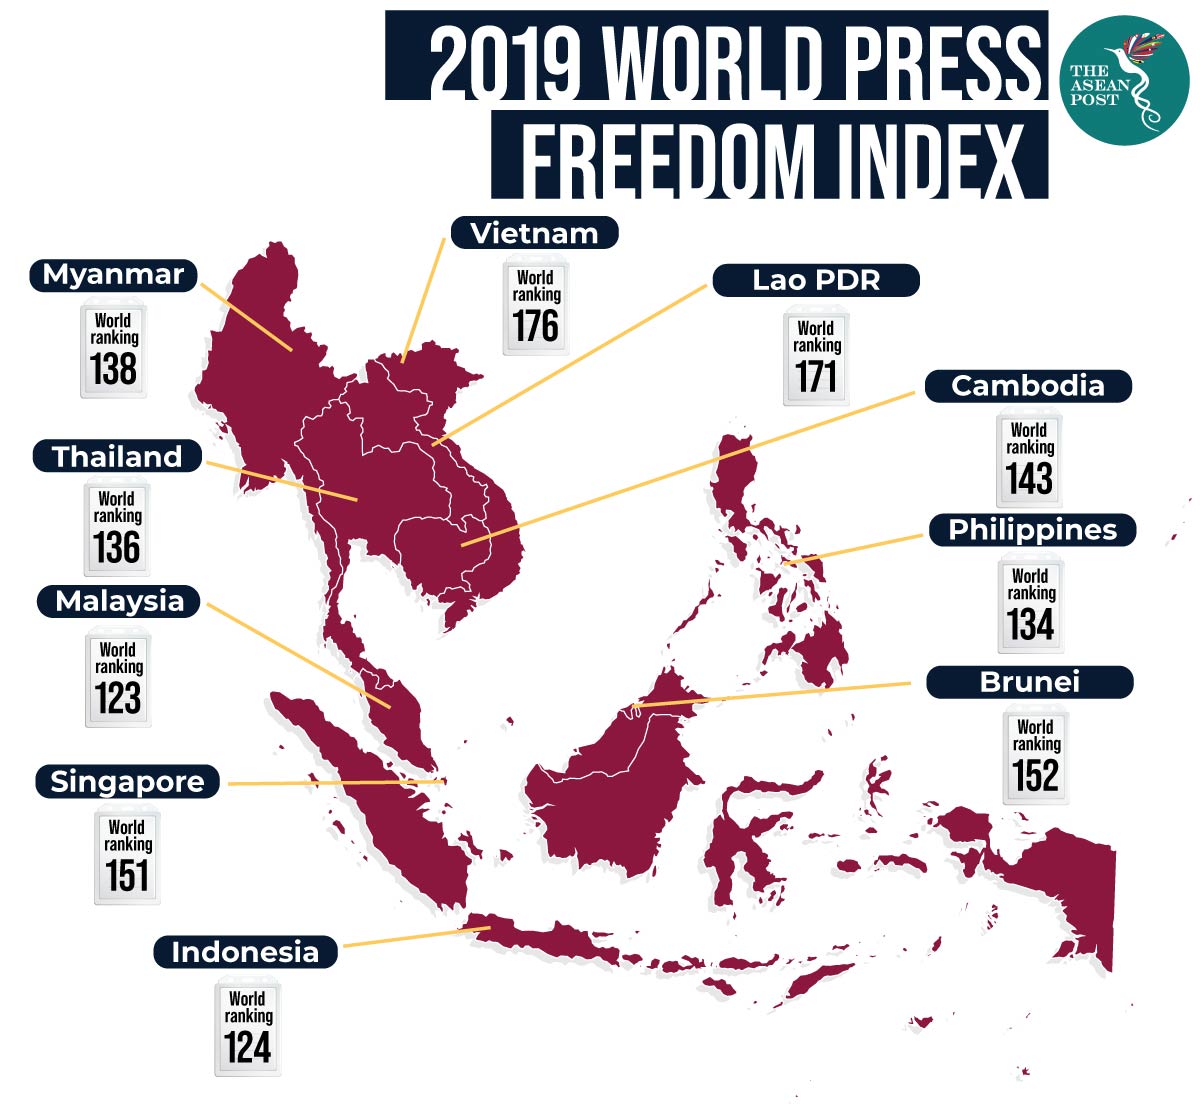 WORLD-PRESS-FREEDOM-INDEX